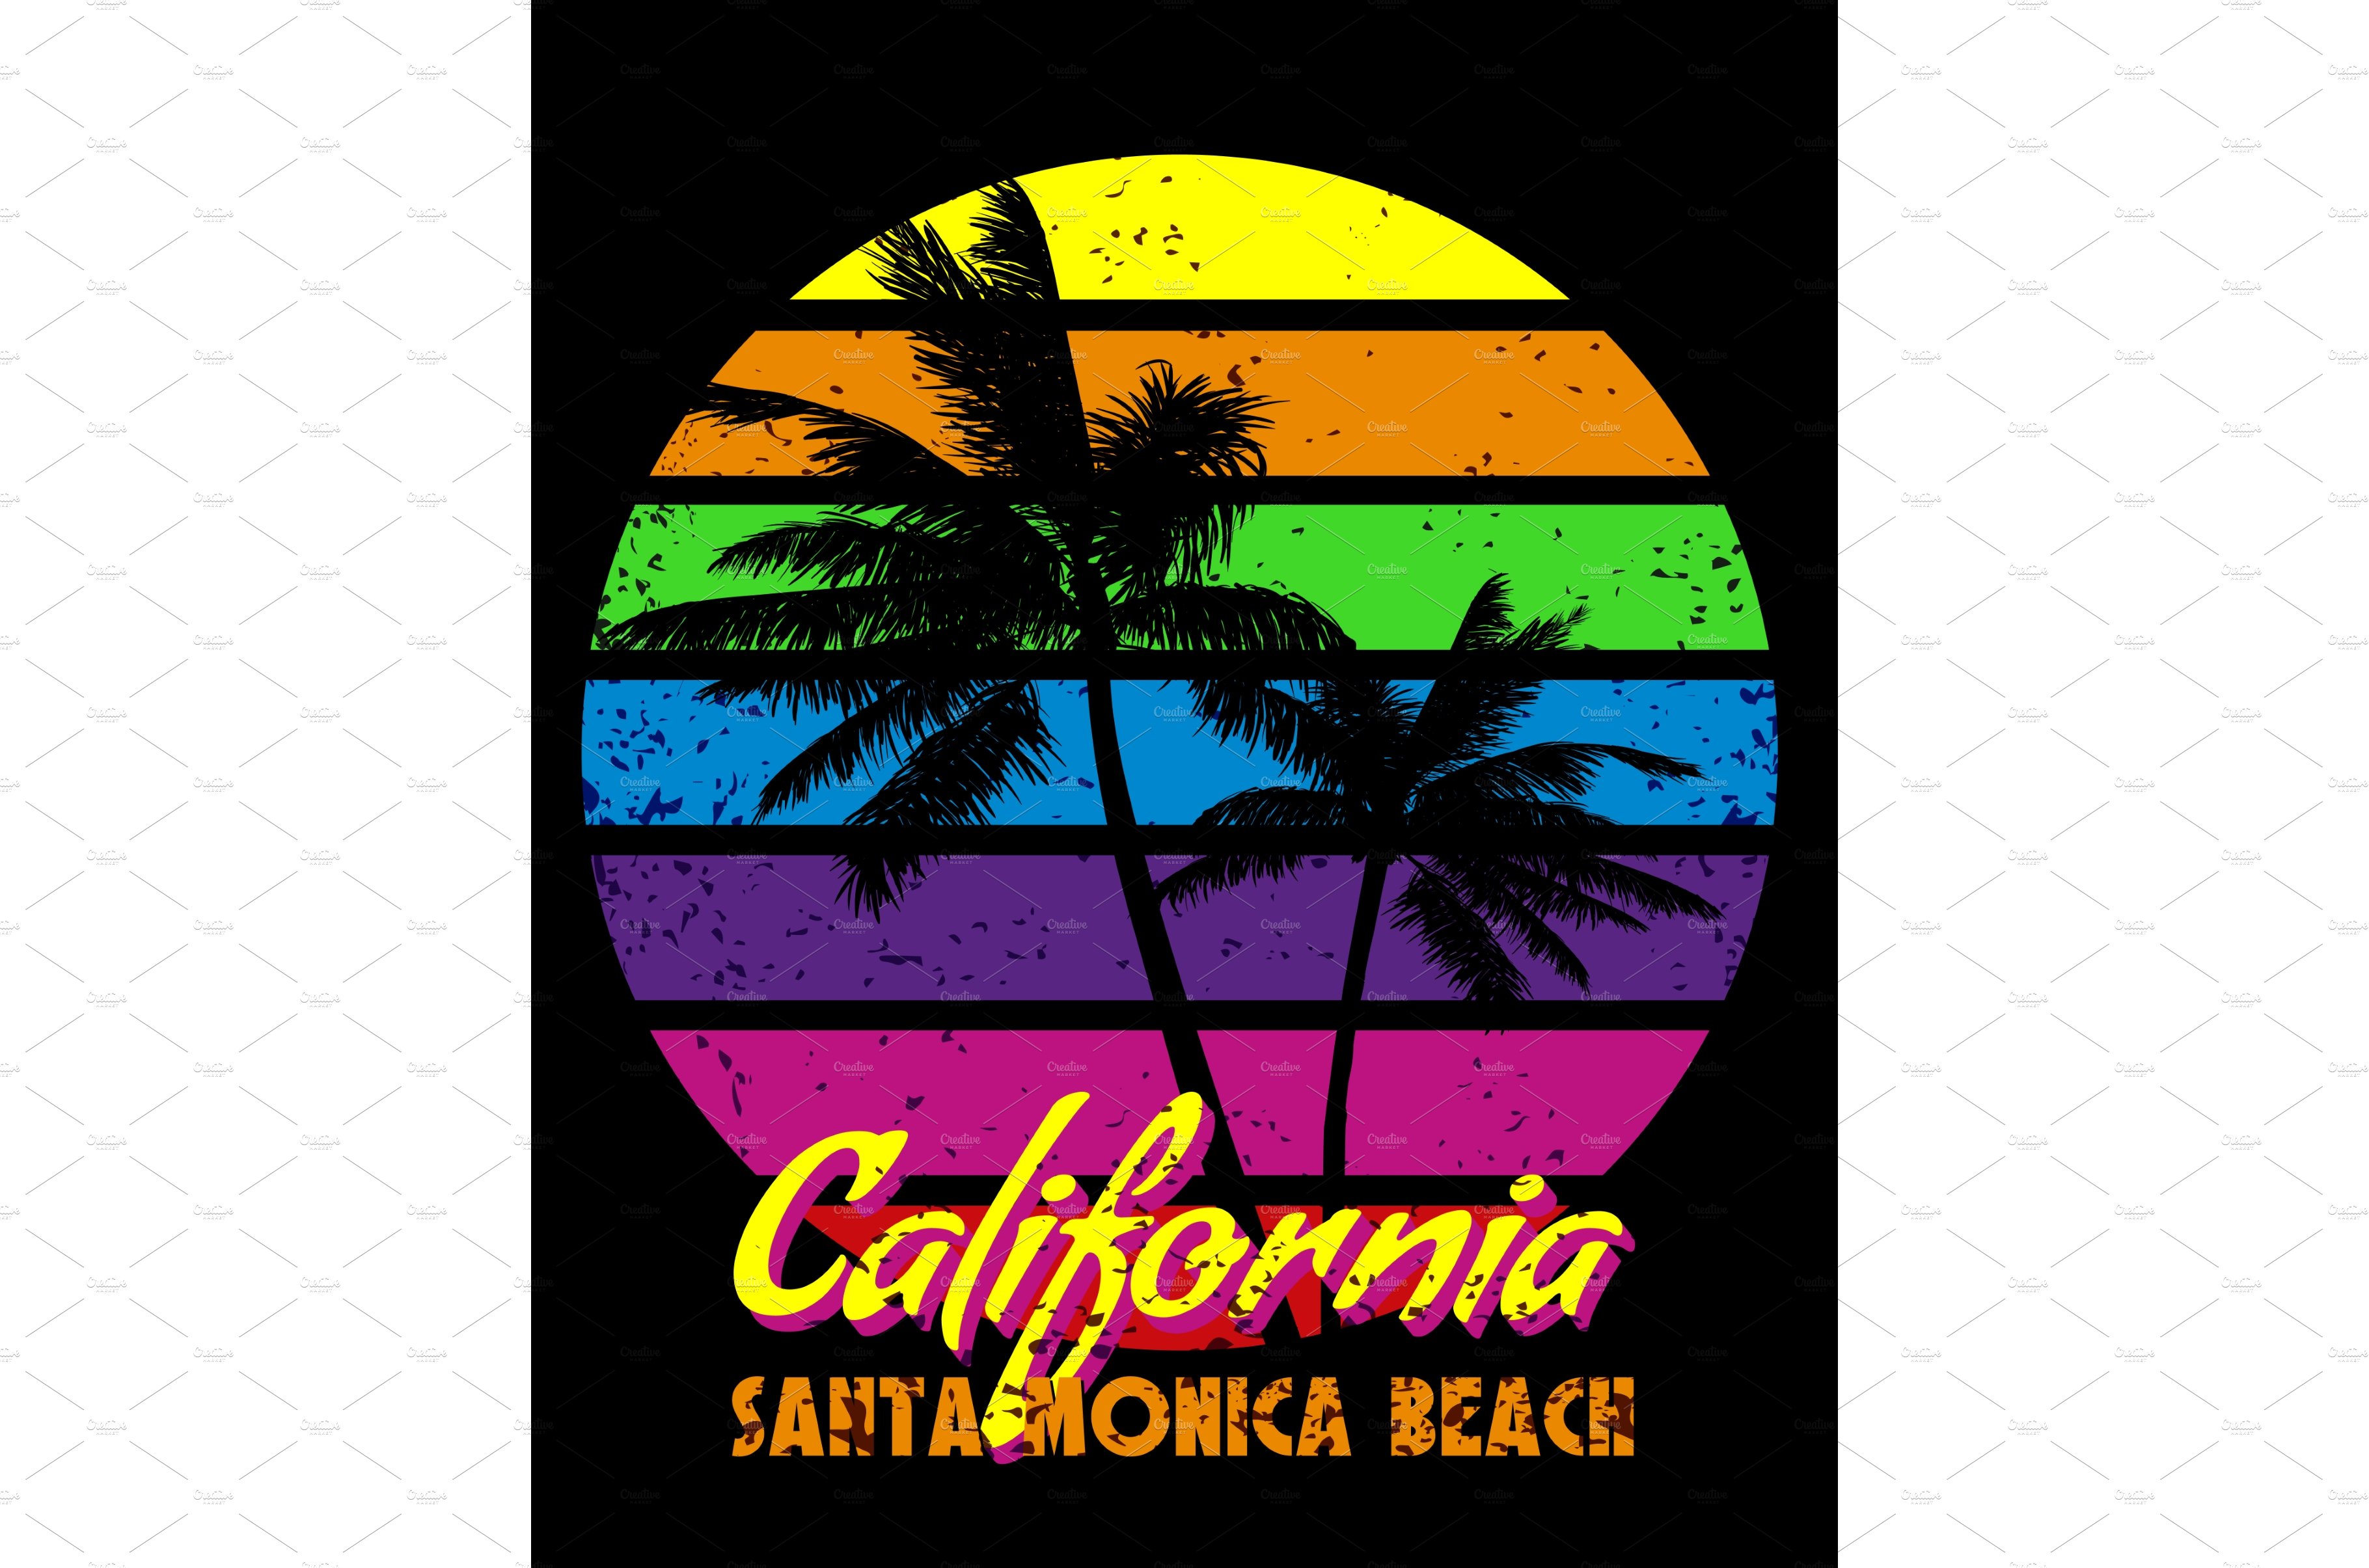 California Santa Monica sunset print cover image.